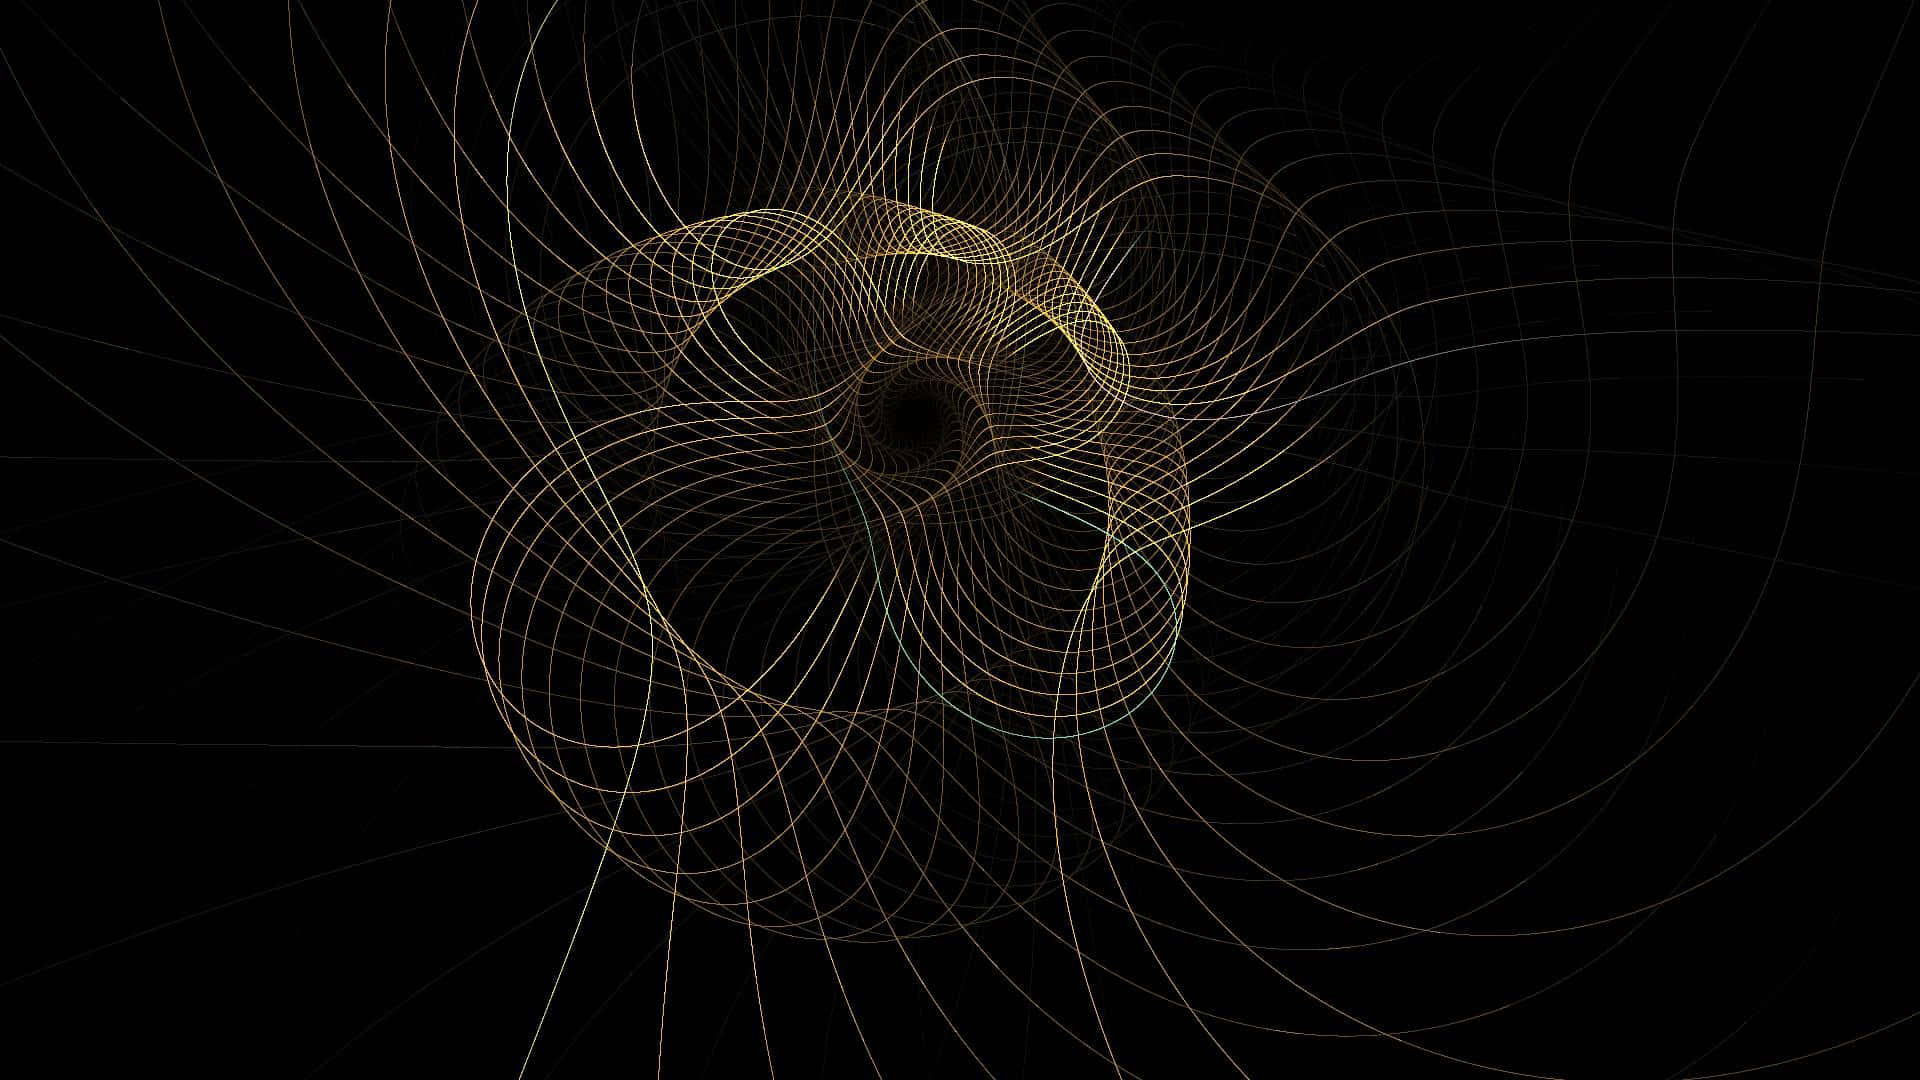 A Black Background With A Golden Spiral Design